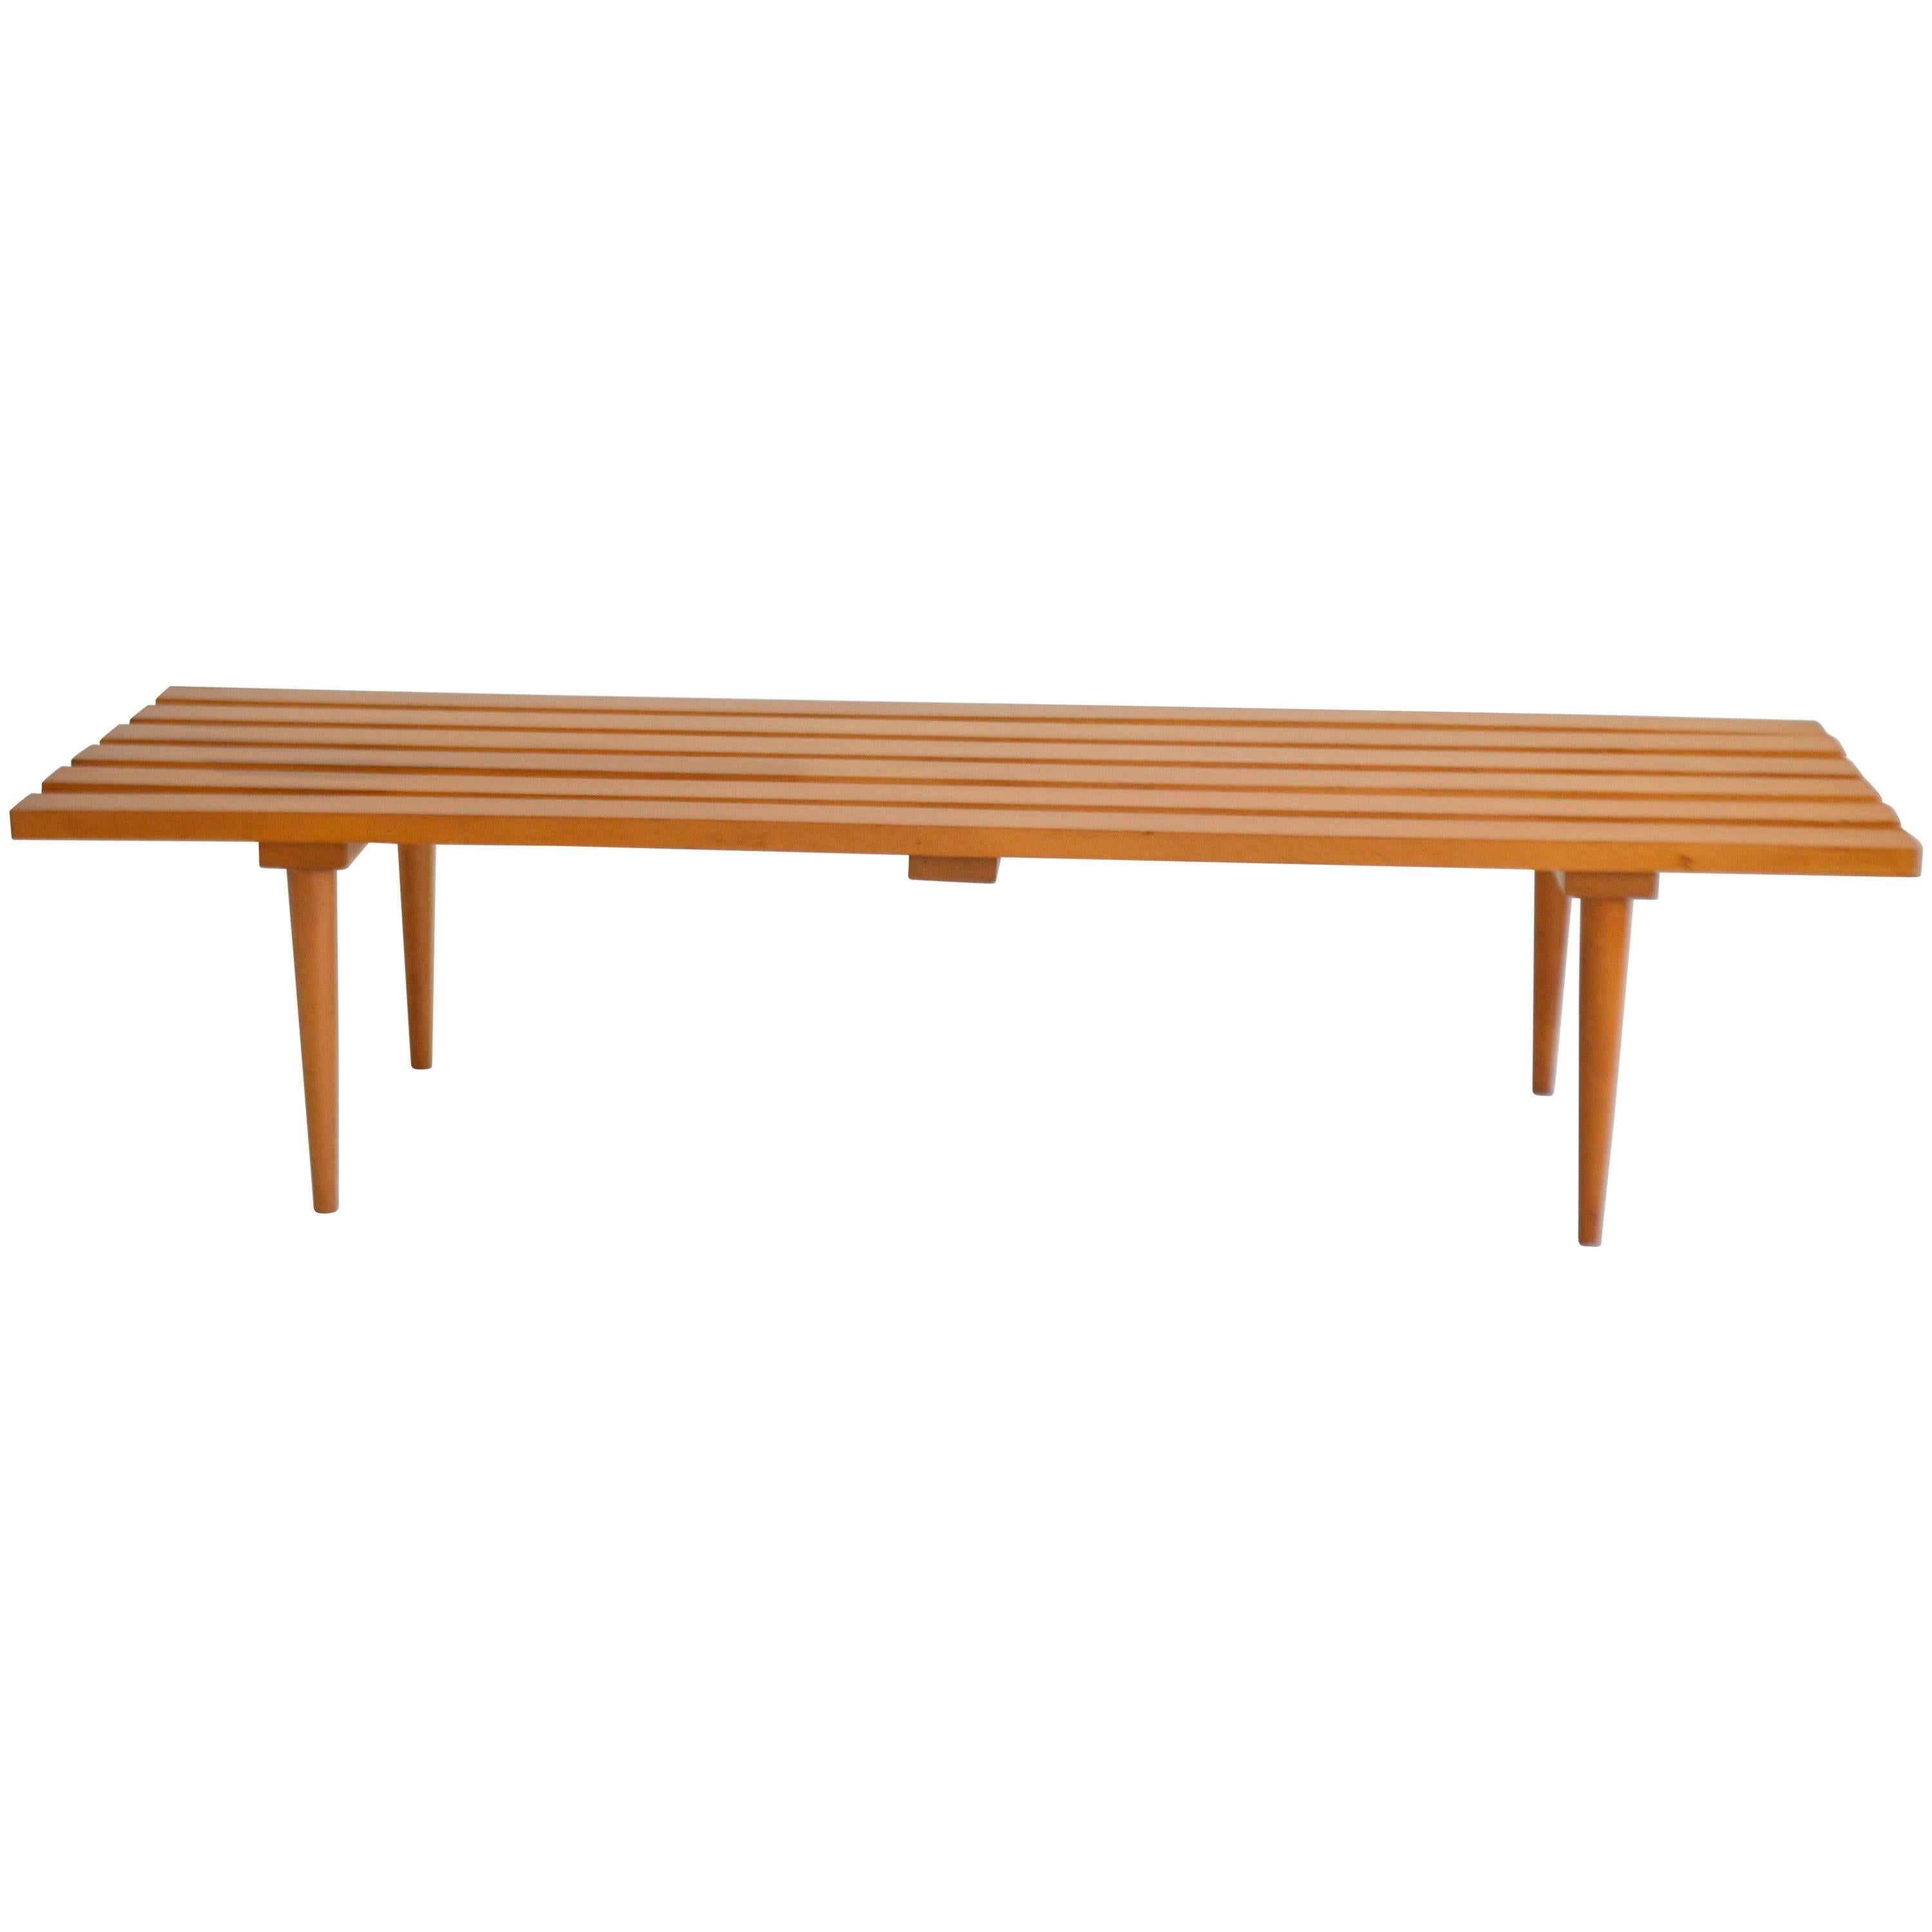 Hardwood Midcentury Wood Slat Bench For Sale